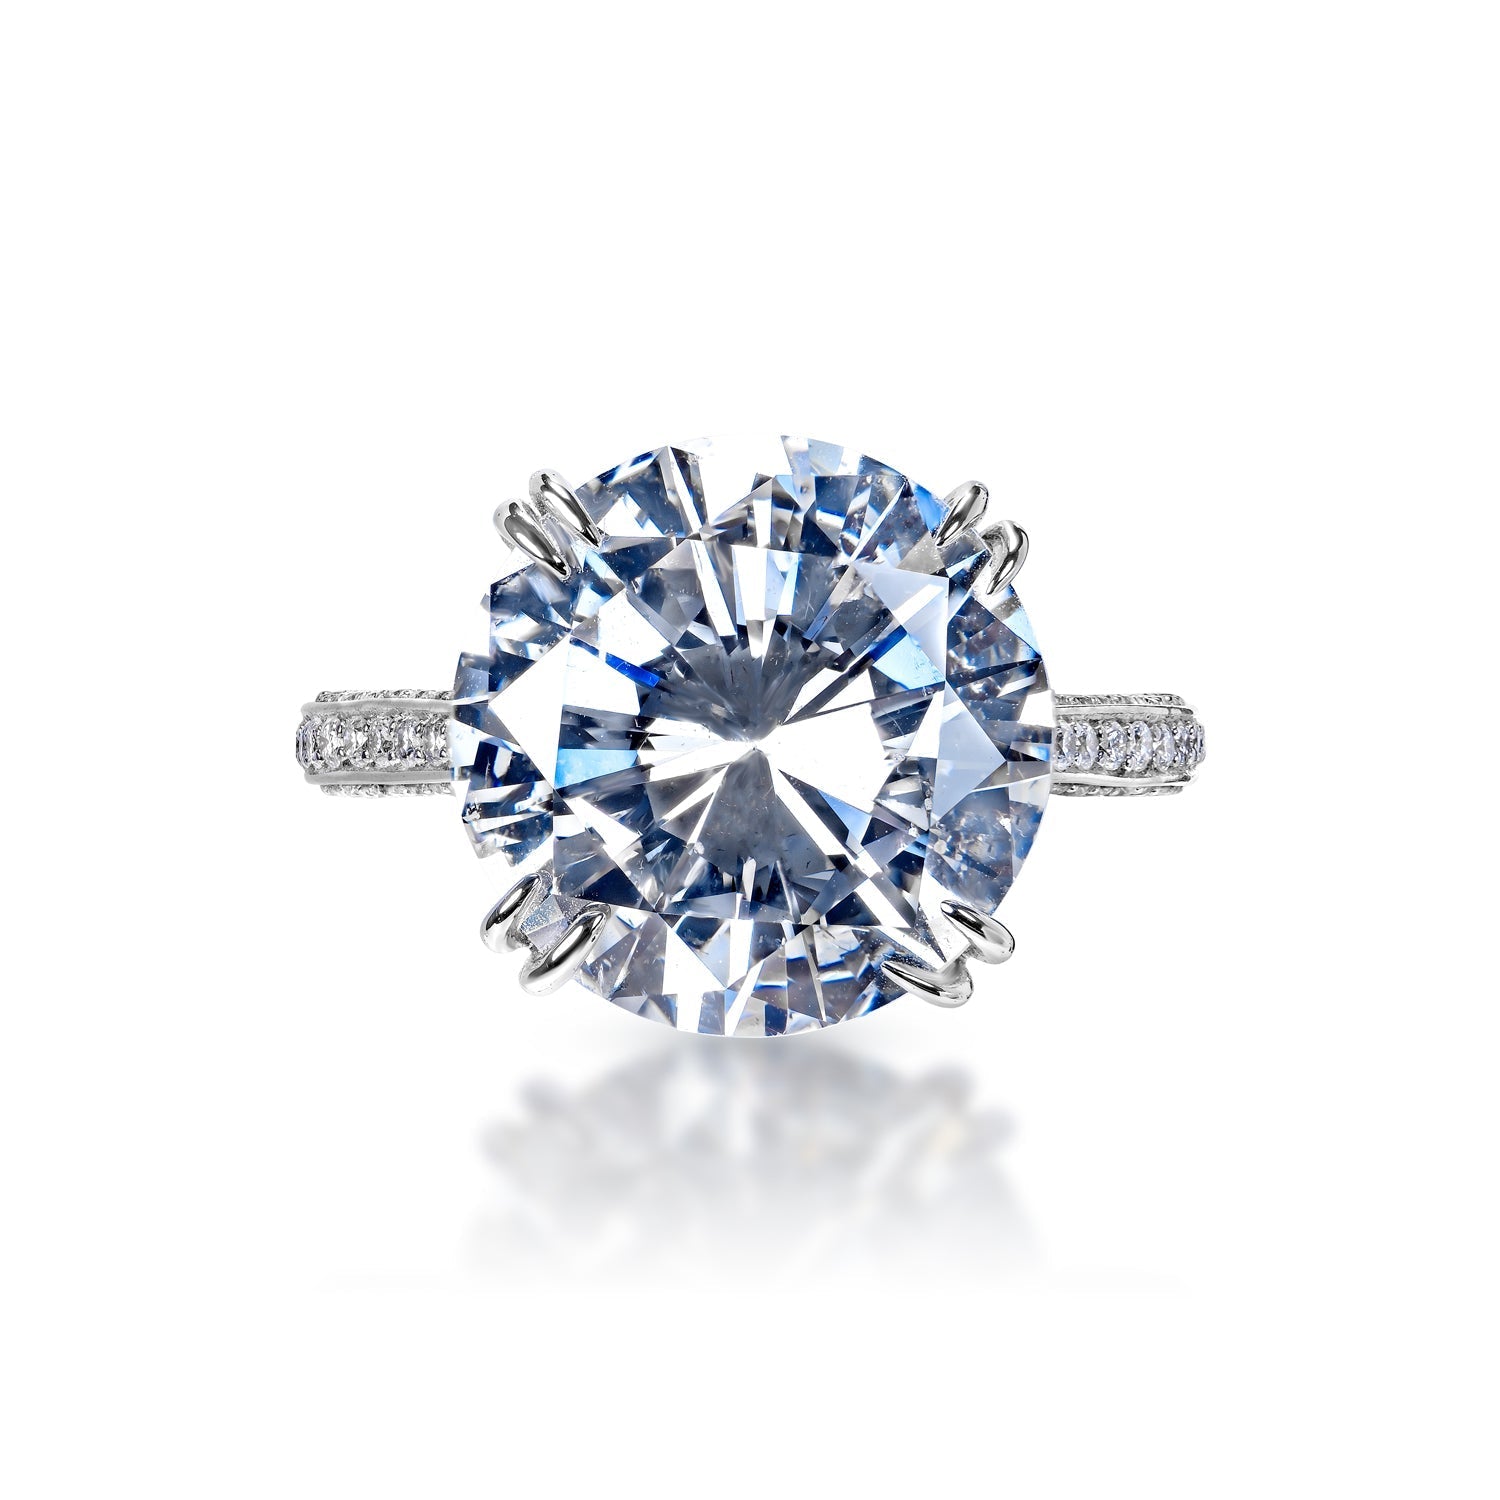 Amalia 8 Carats E VS2 Round Brilliant Diamond Engagement Ring in 18k White Gold Front View